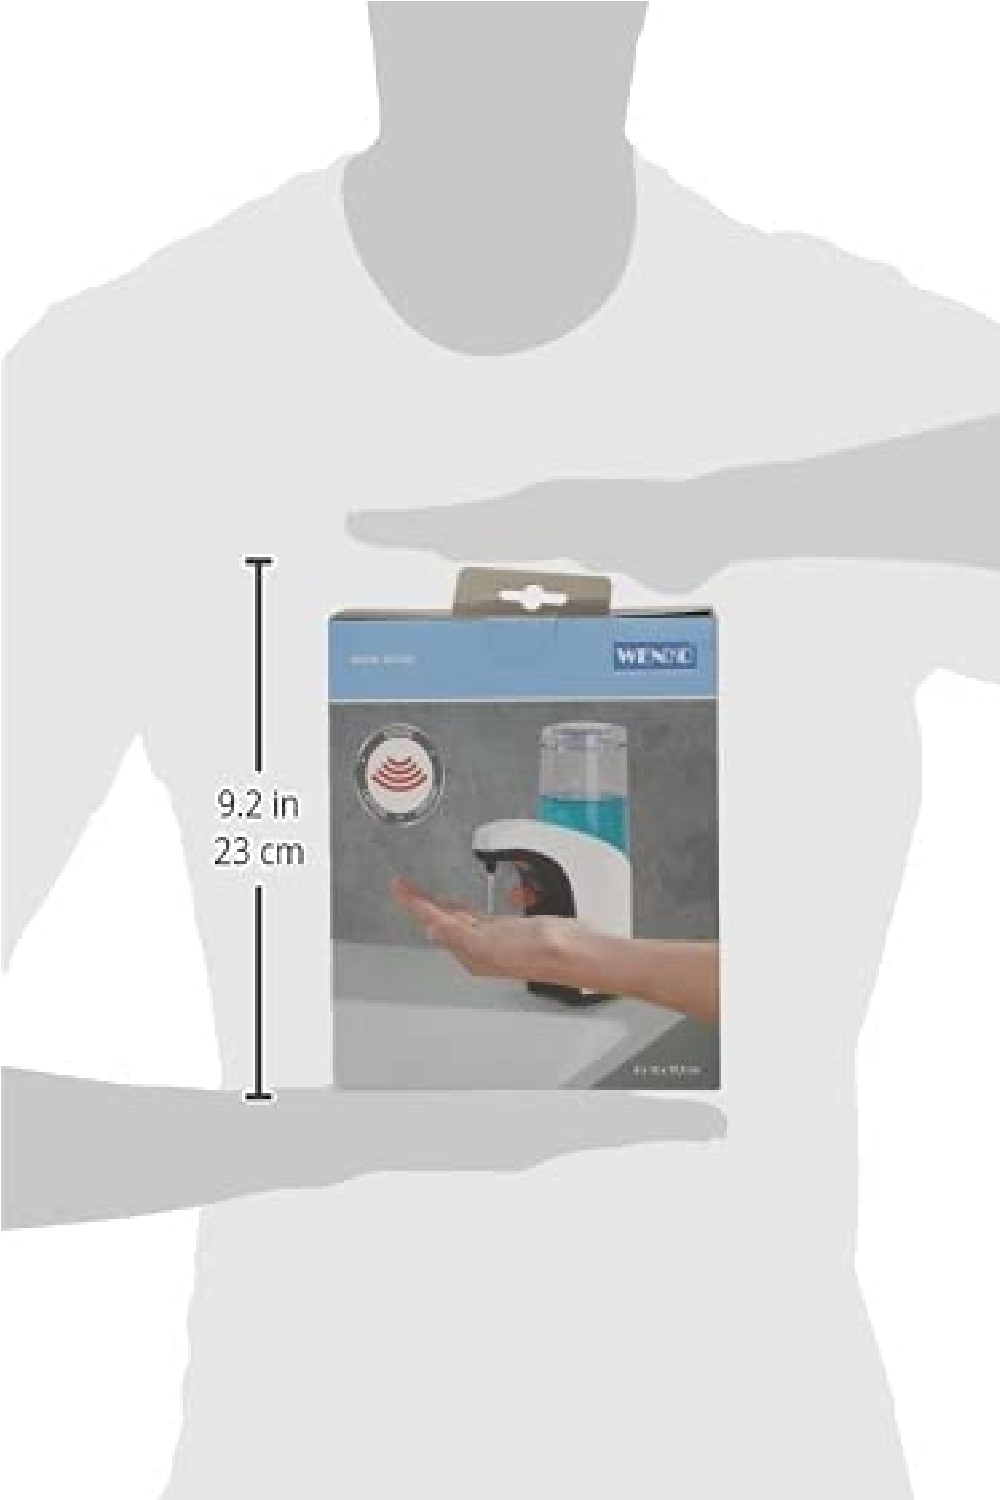 Sensor Seifenspender Butler - automatischer Flüssigseifen-Spender, Infrarot-Seifenspender Fassungsvermögen: 0.3 l, Kunststoff (ABS), 8 x 19.5 x 15 cm, Weiß